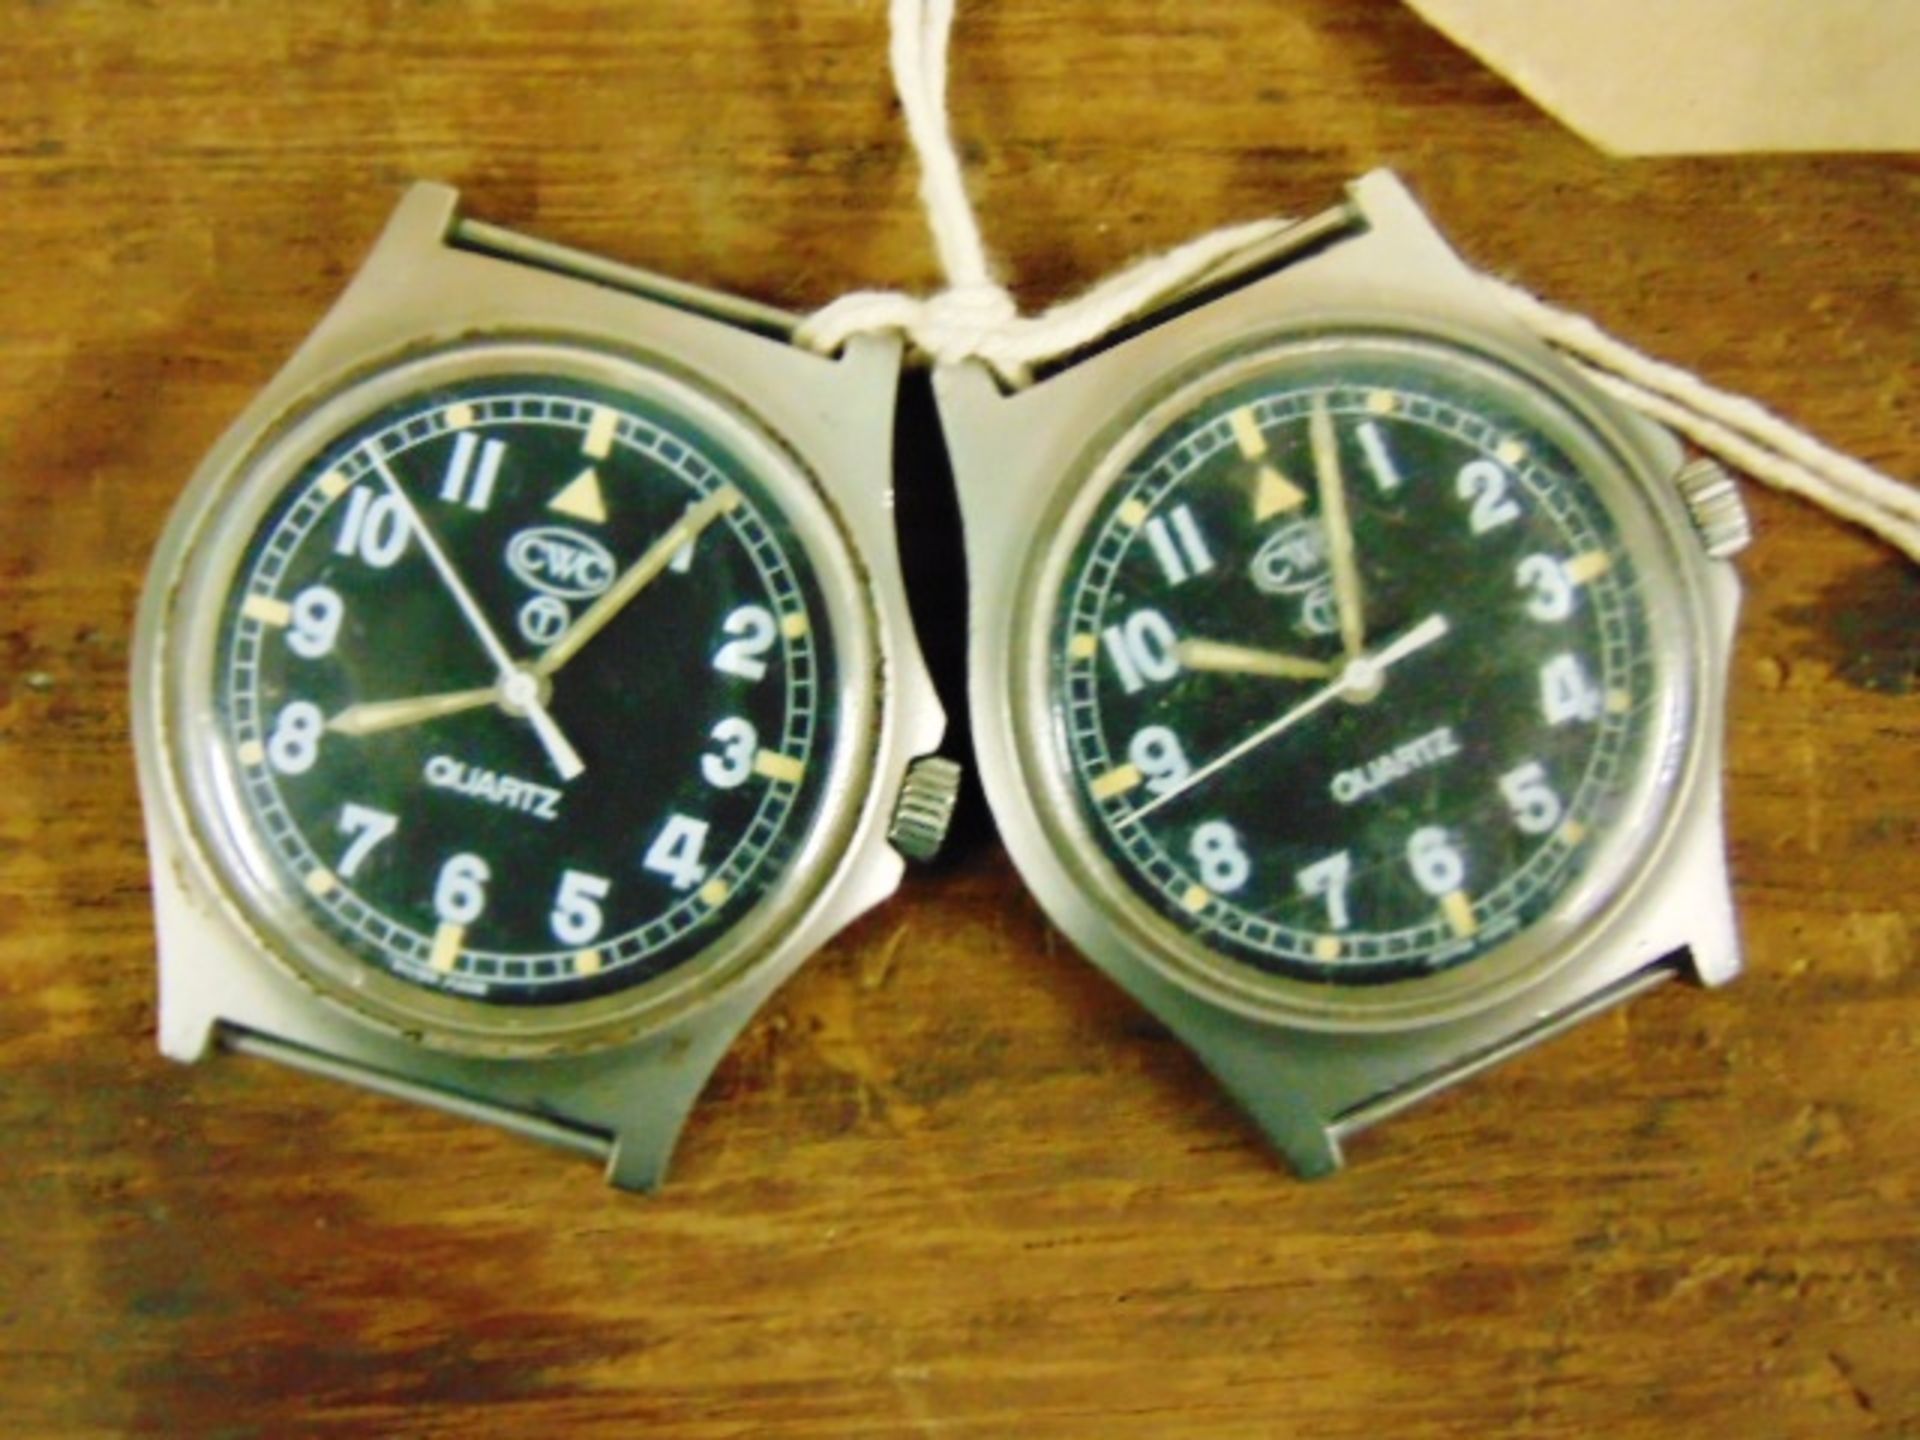 2 x Very Rare Genuine Royal Marines, Navy issue 0555, CWC quartz wrist watches - Image 2 of 5